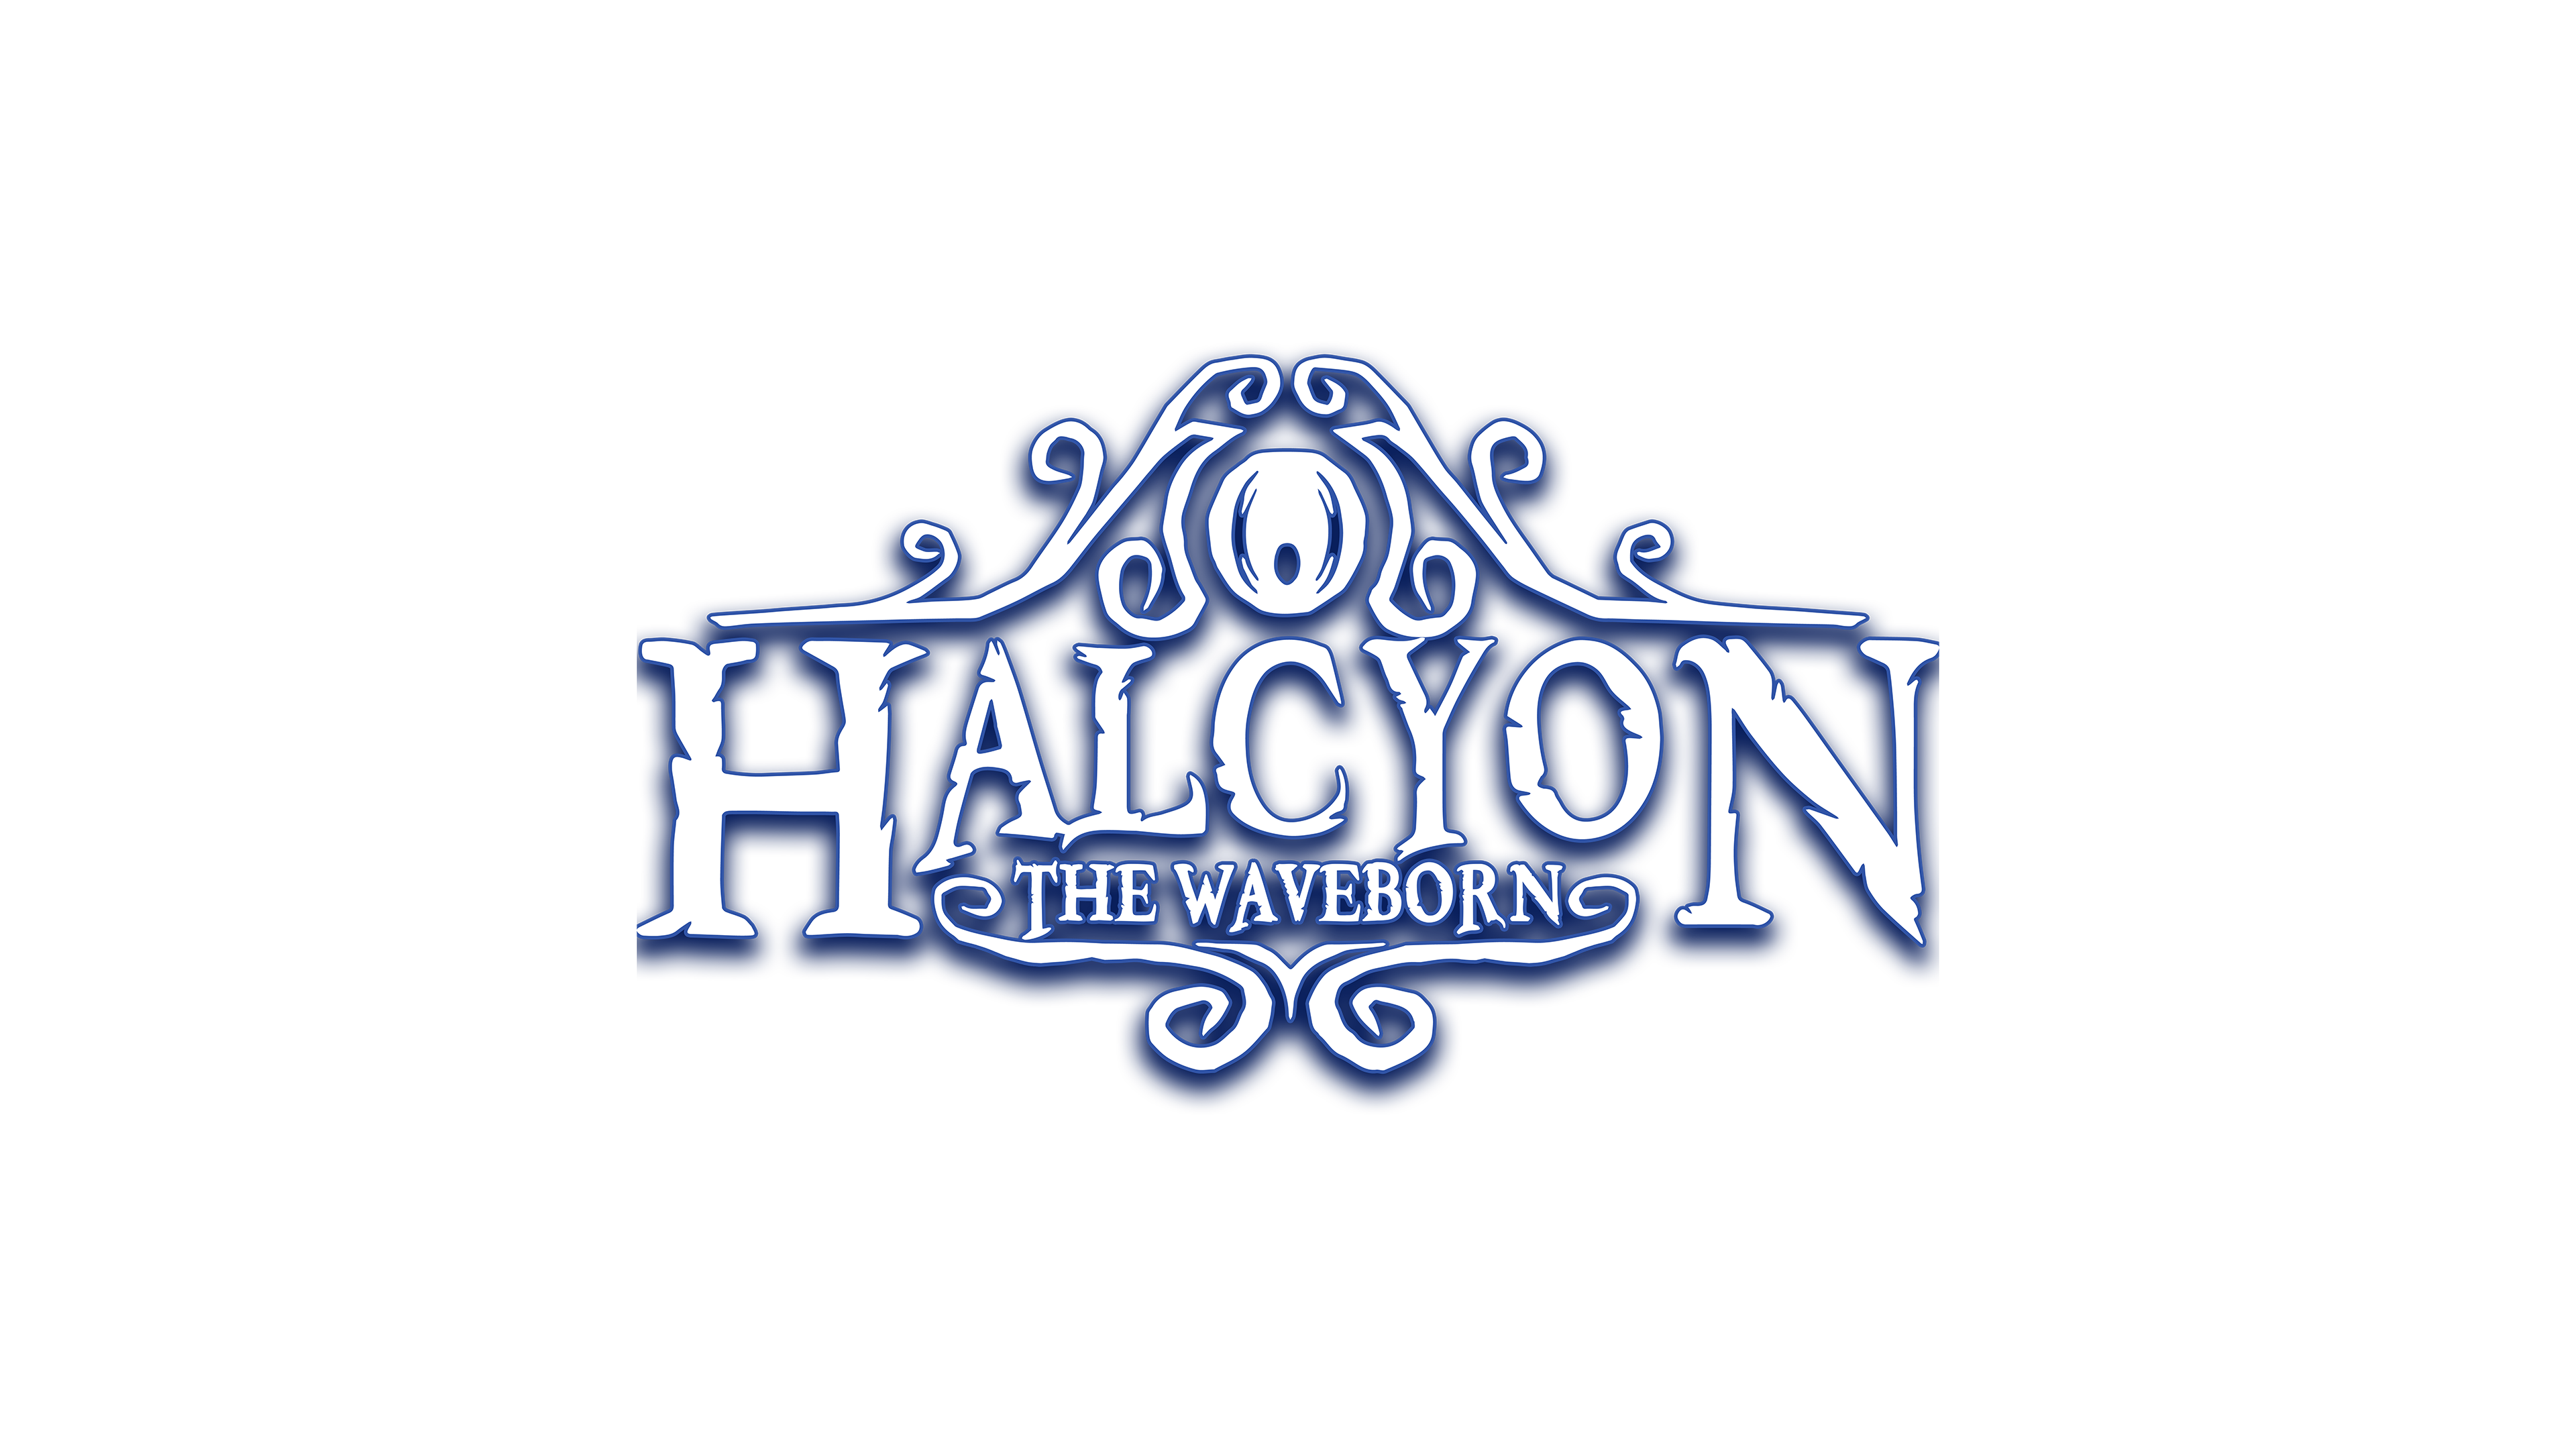 Halcyon: The Waveborn